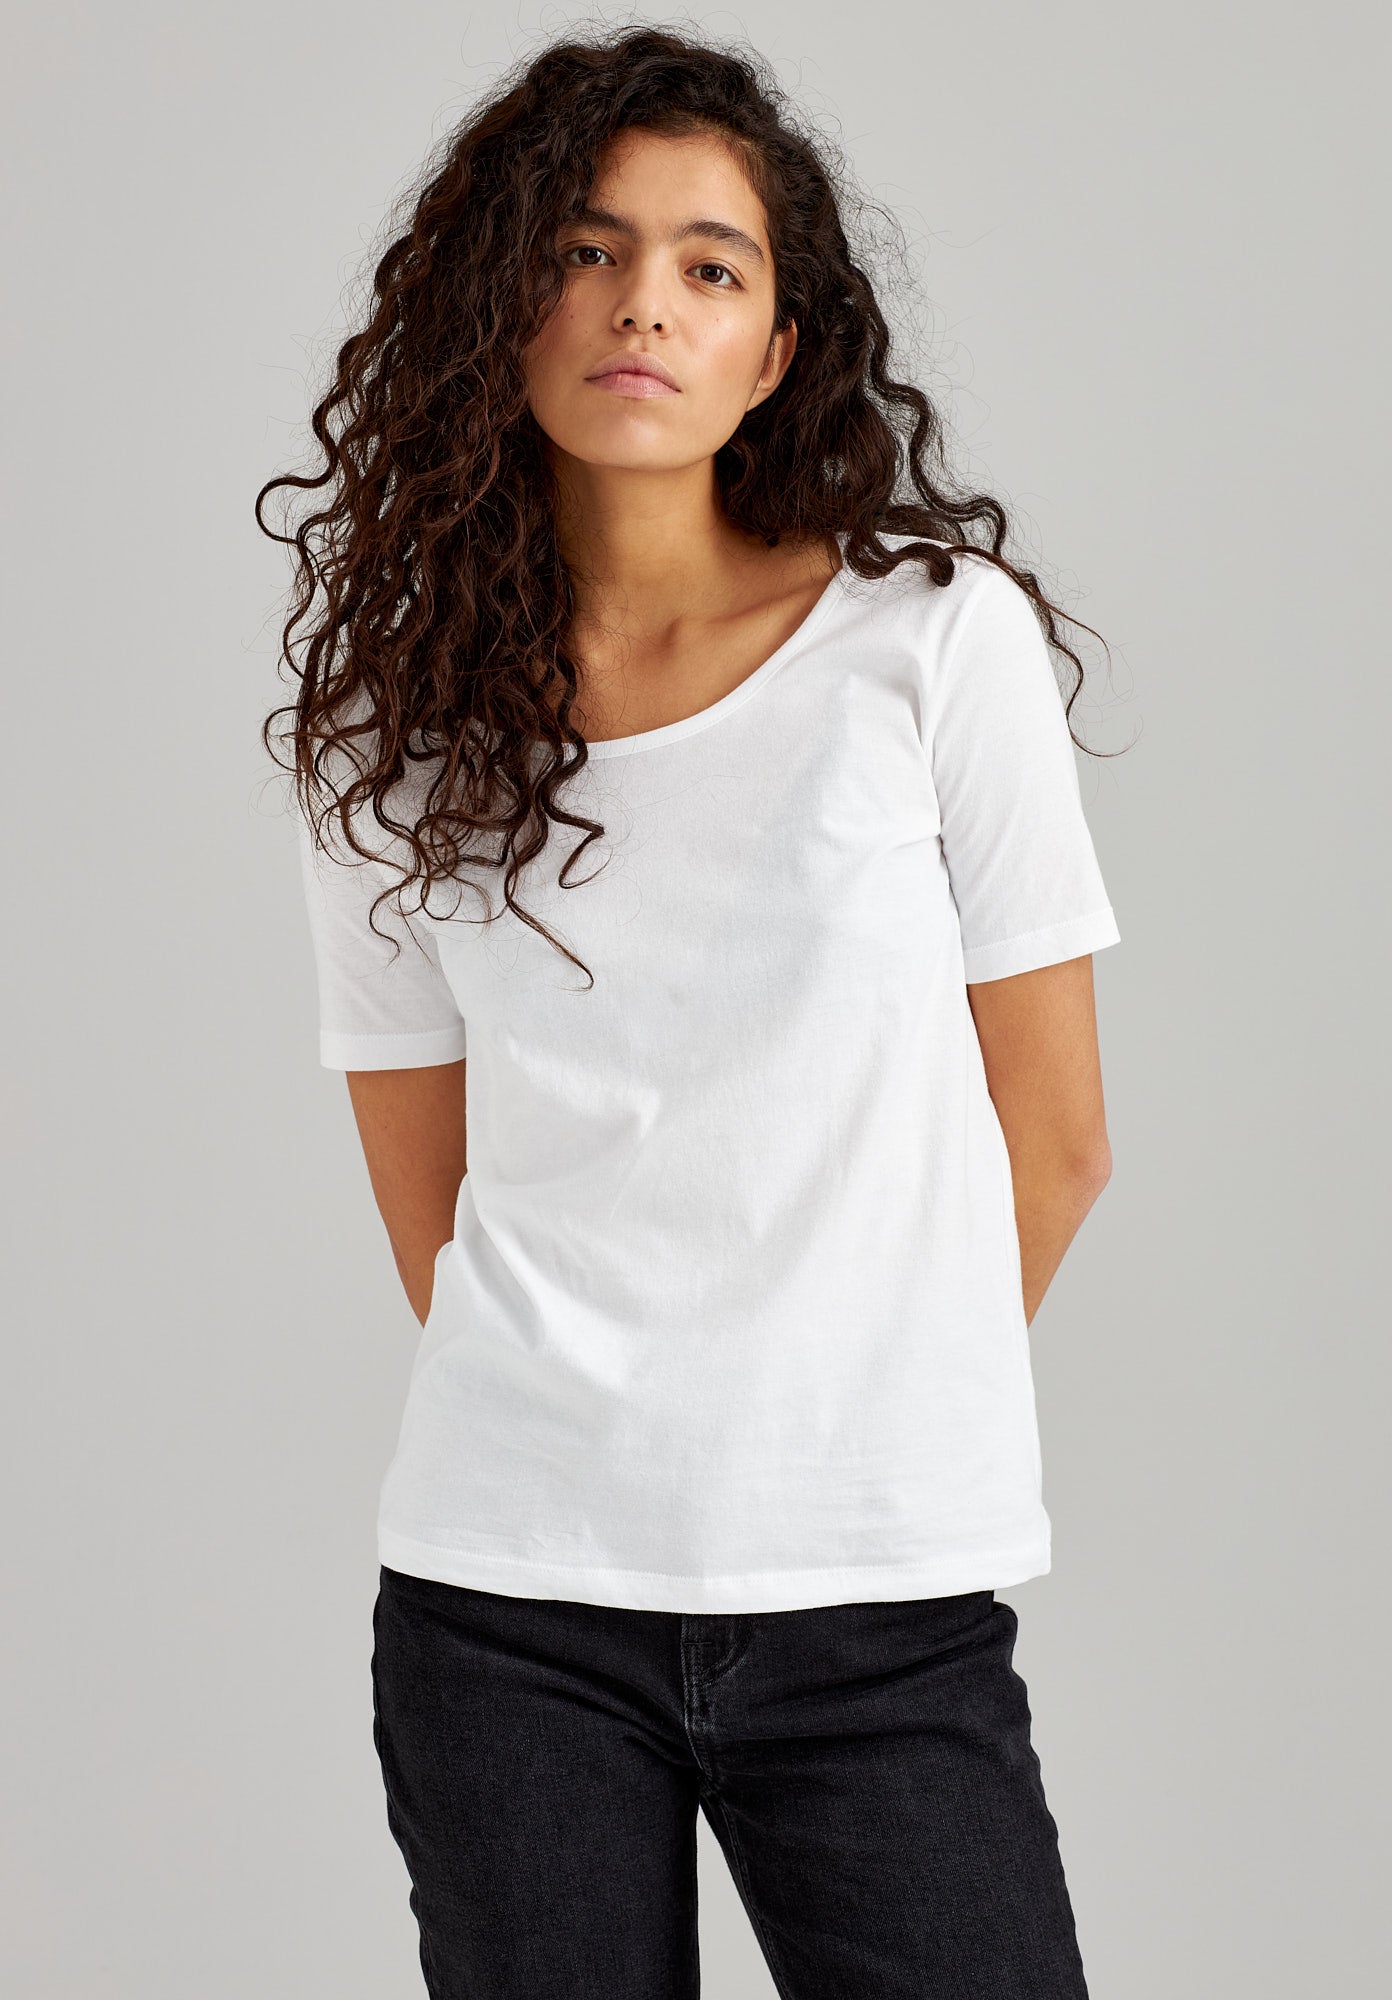 TT64 T-Shirt White (GOTS)